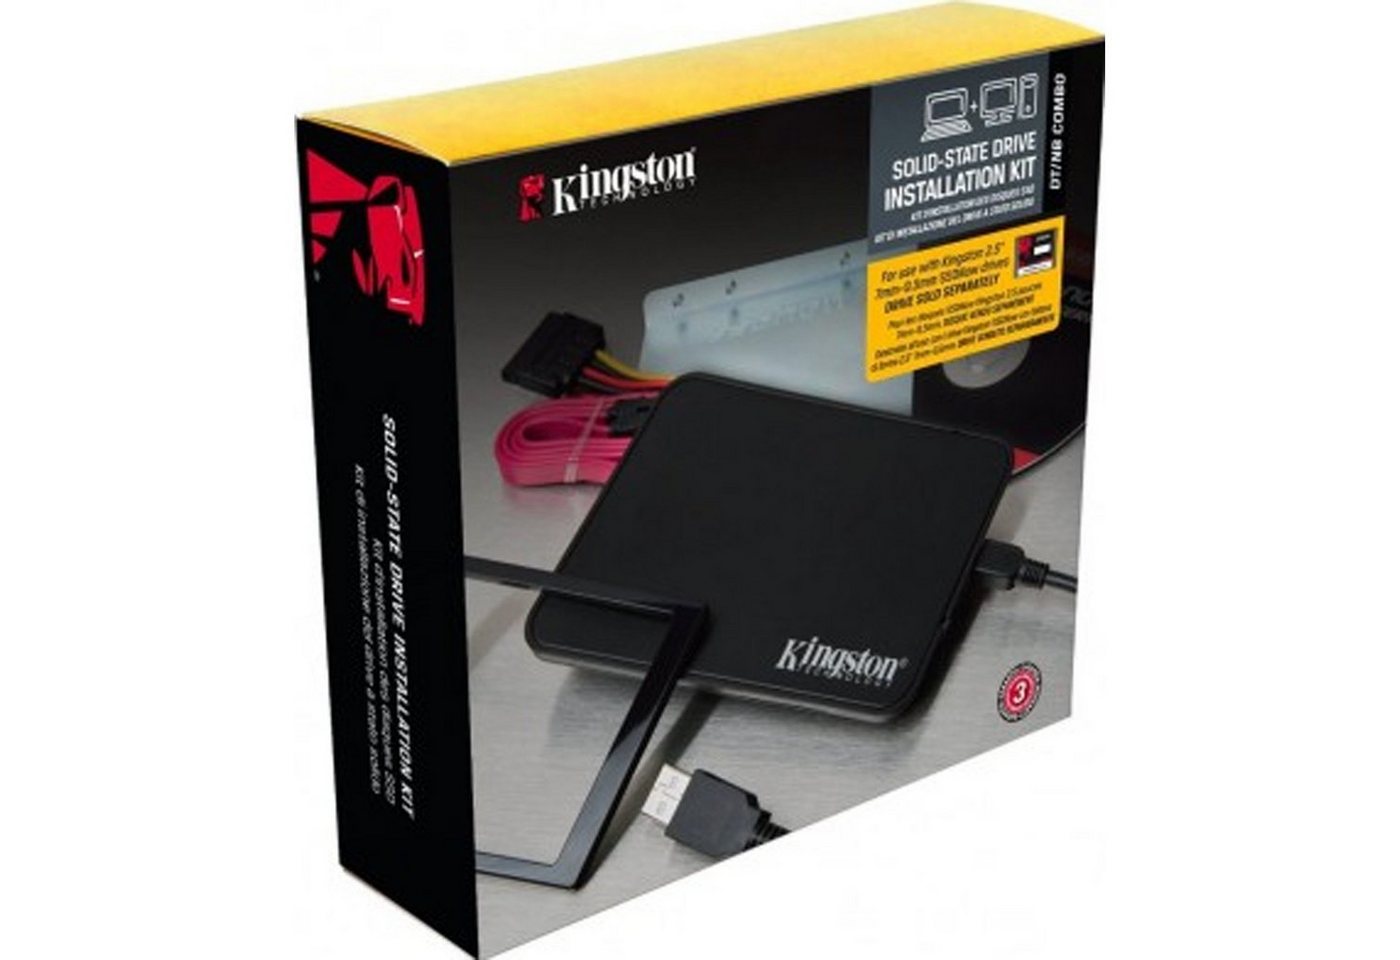 Kingston Festplatten-Einbaurahmen SSD Installation Kit von Kingston